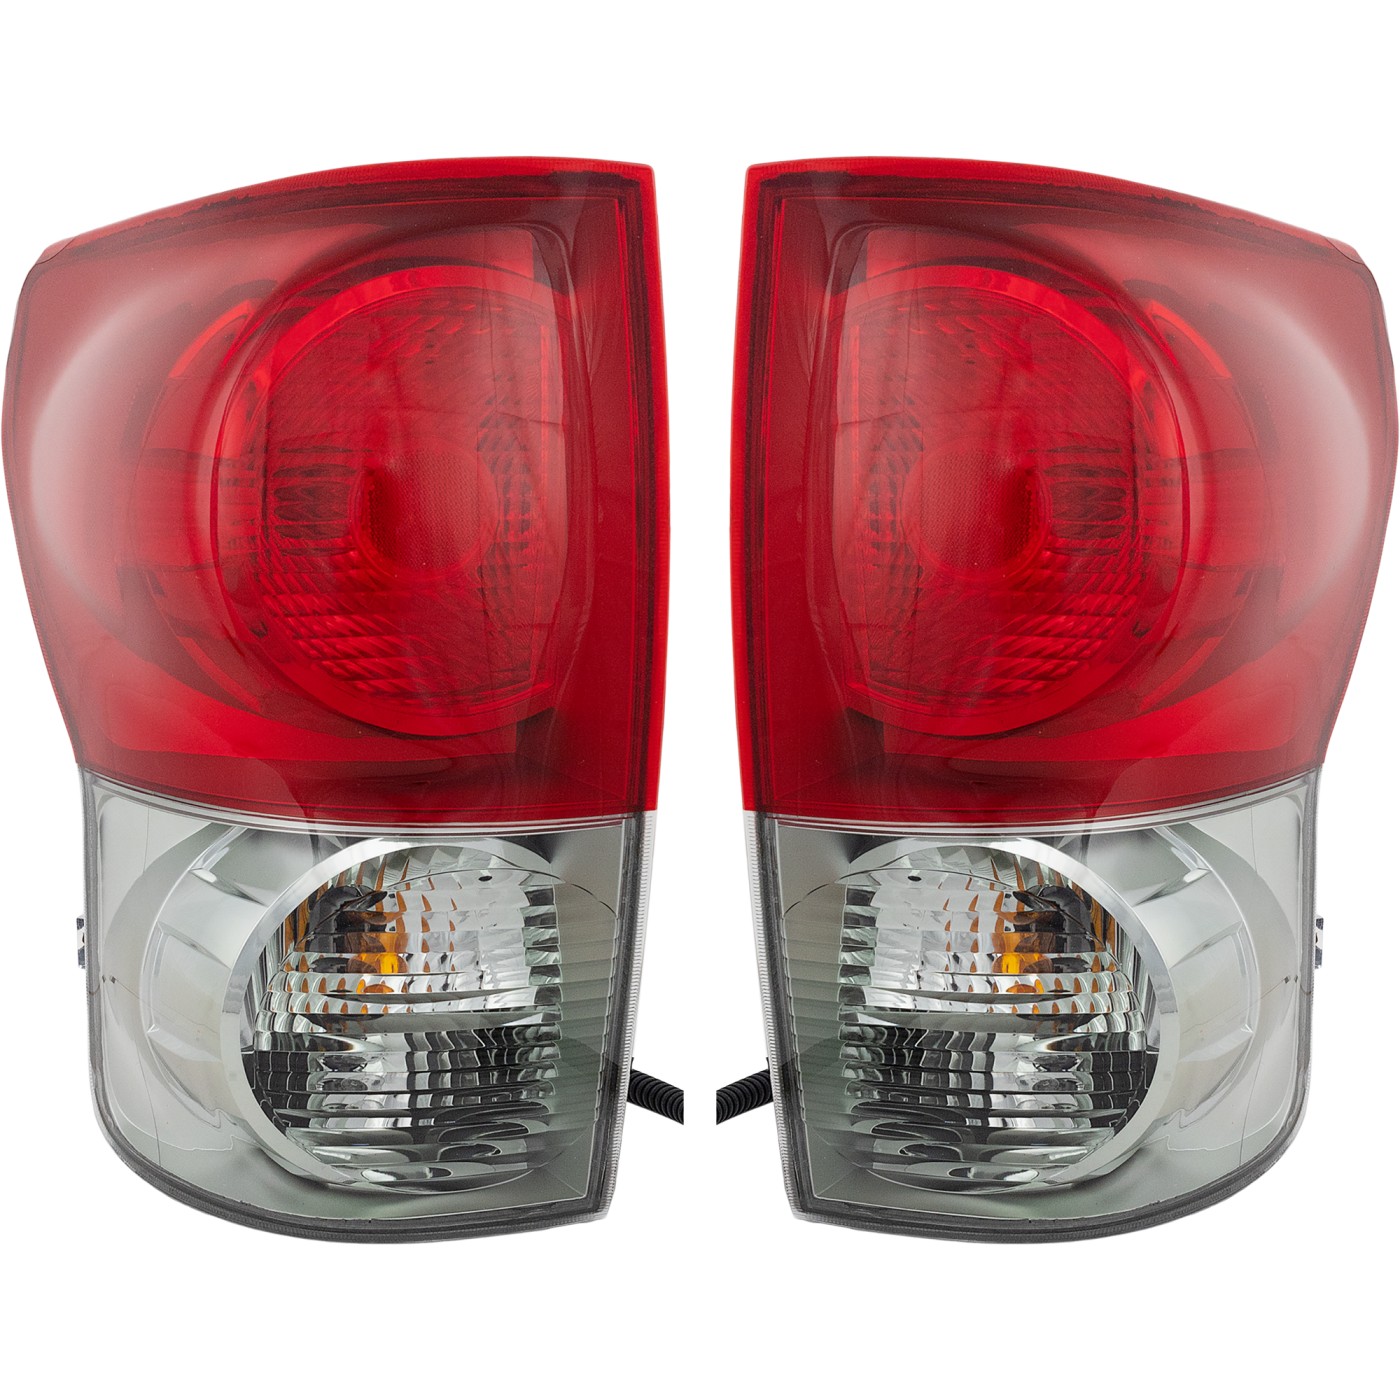 Set of 2 Tail Light For 2007-2009 Toyota Tundra LH & RH w/ Bulb(s) | eBay